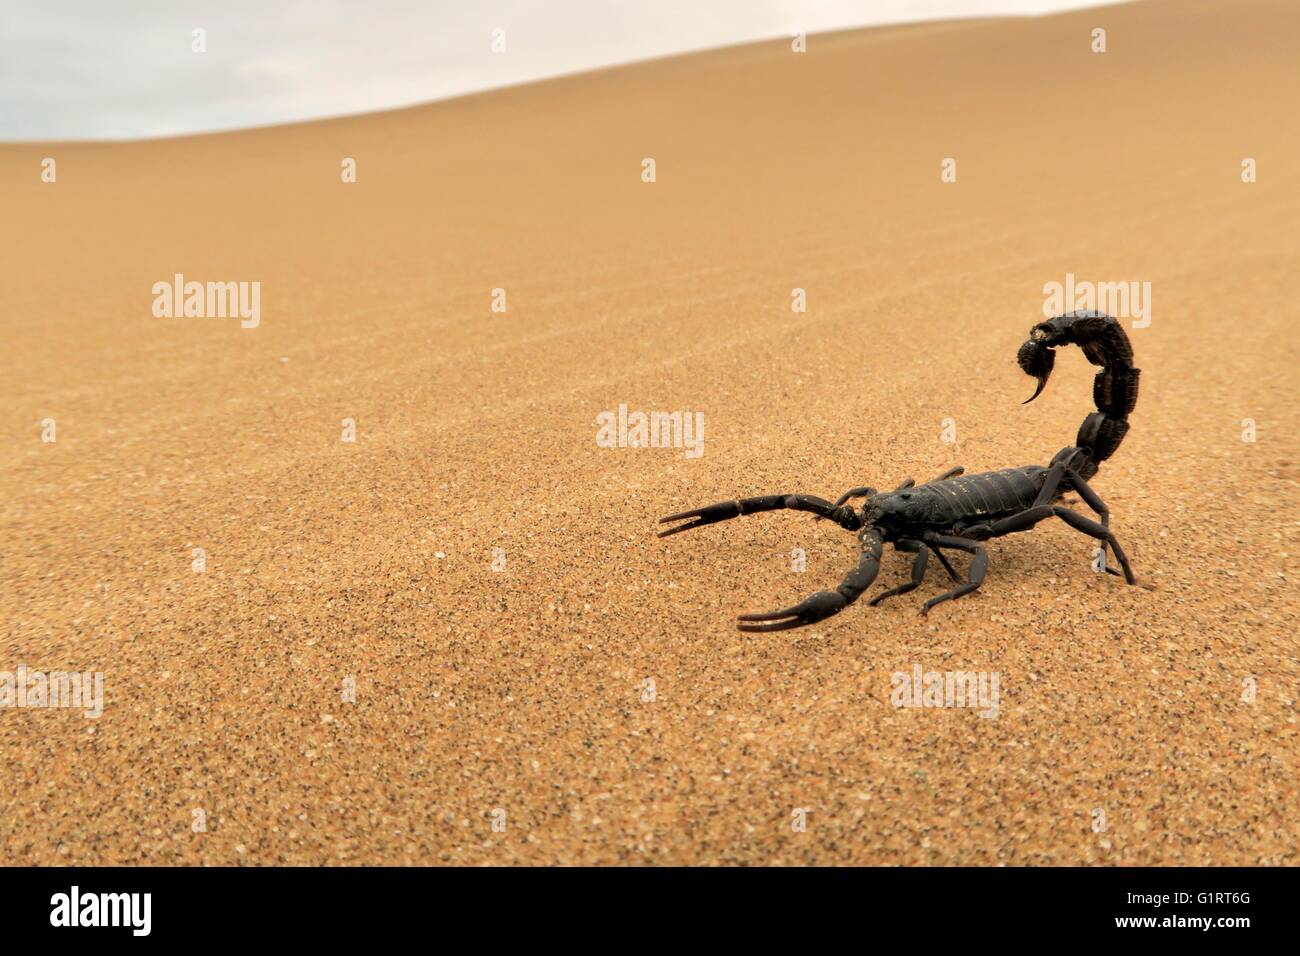 Black scorpion (Parabuthus villosus) running on sand, Namib Desert in Swakopmund, Namibia Stock Photo